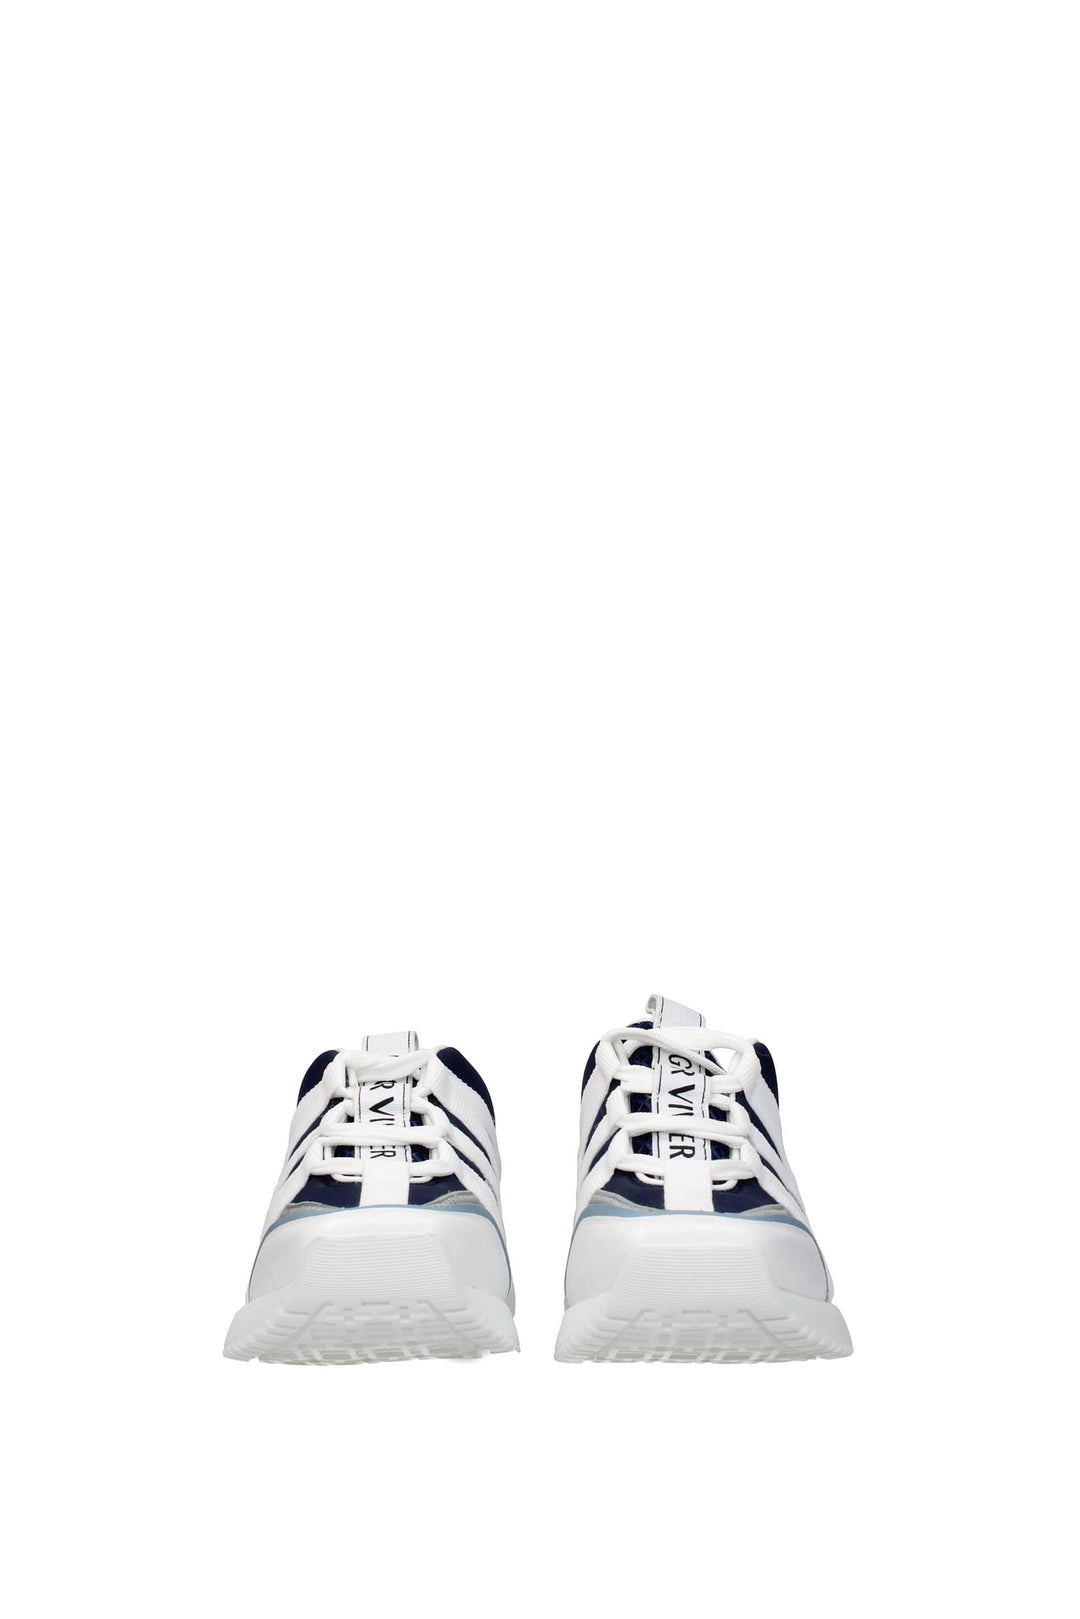 Sneakers Tessuto Bianco Blu Scuro - Roger Vivier - Donna